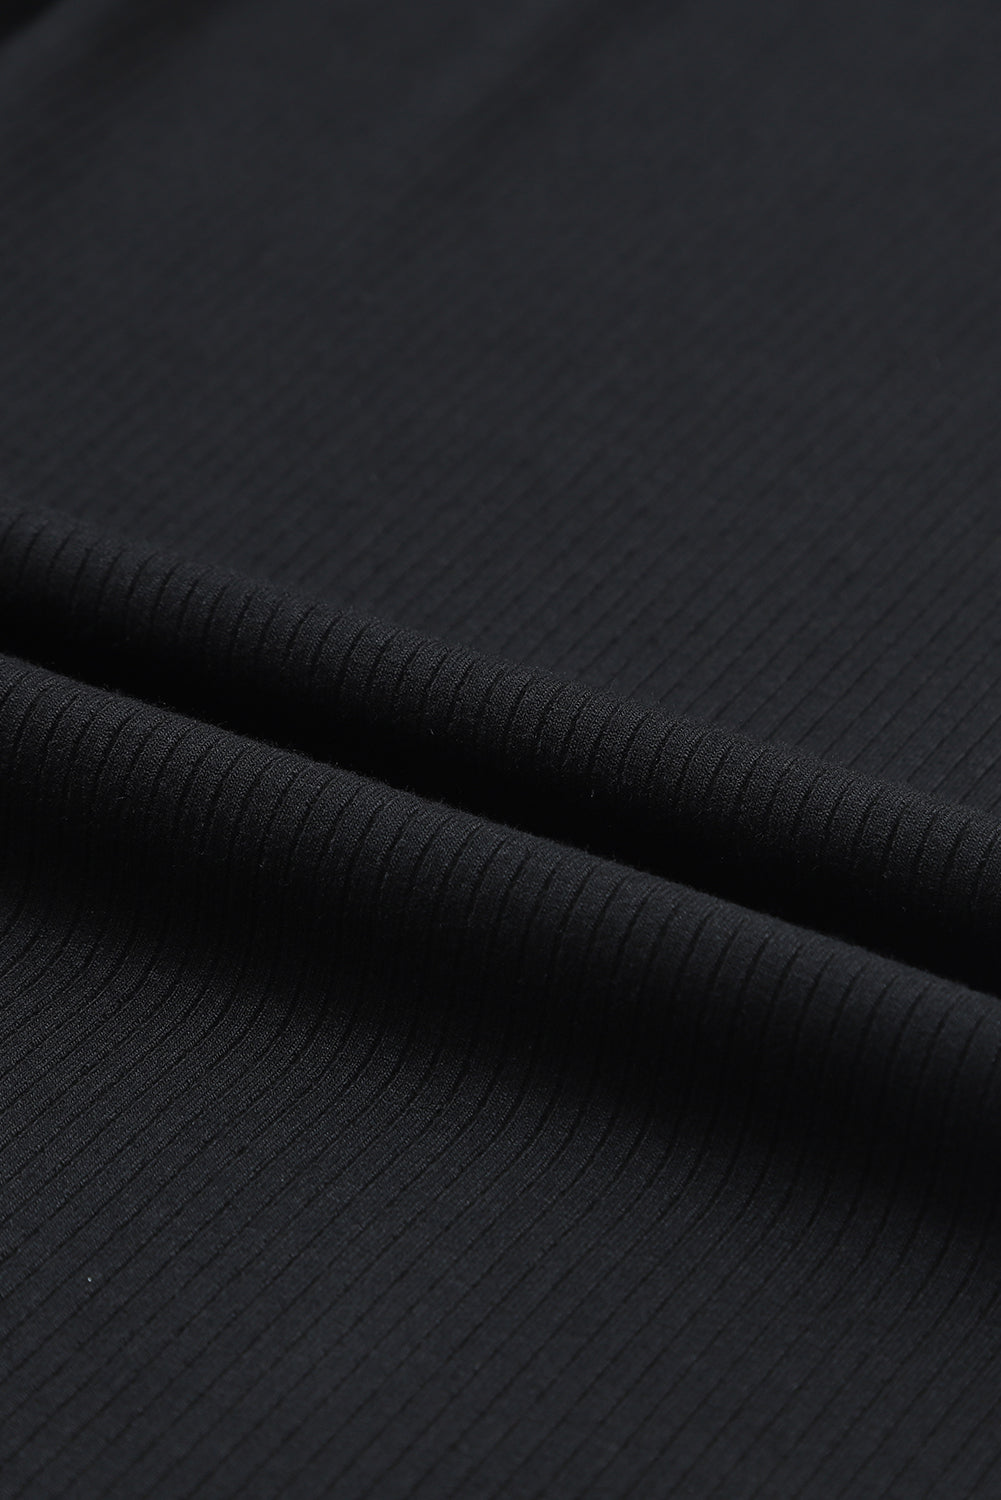 Black Ribbed Knit High Neck Long Sleeve Top MTS0156